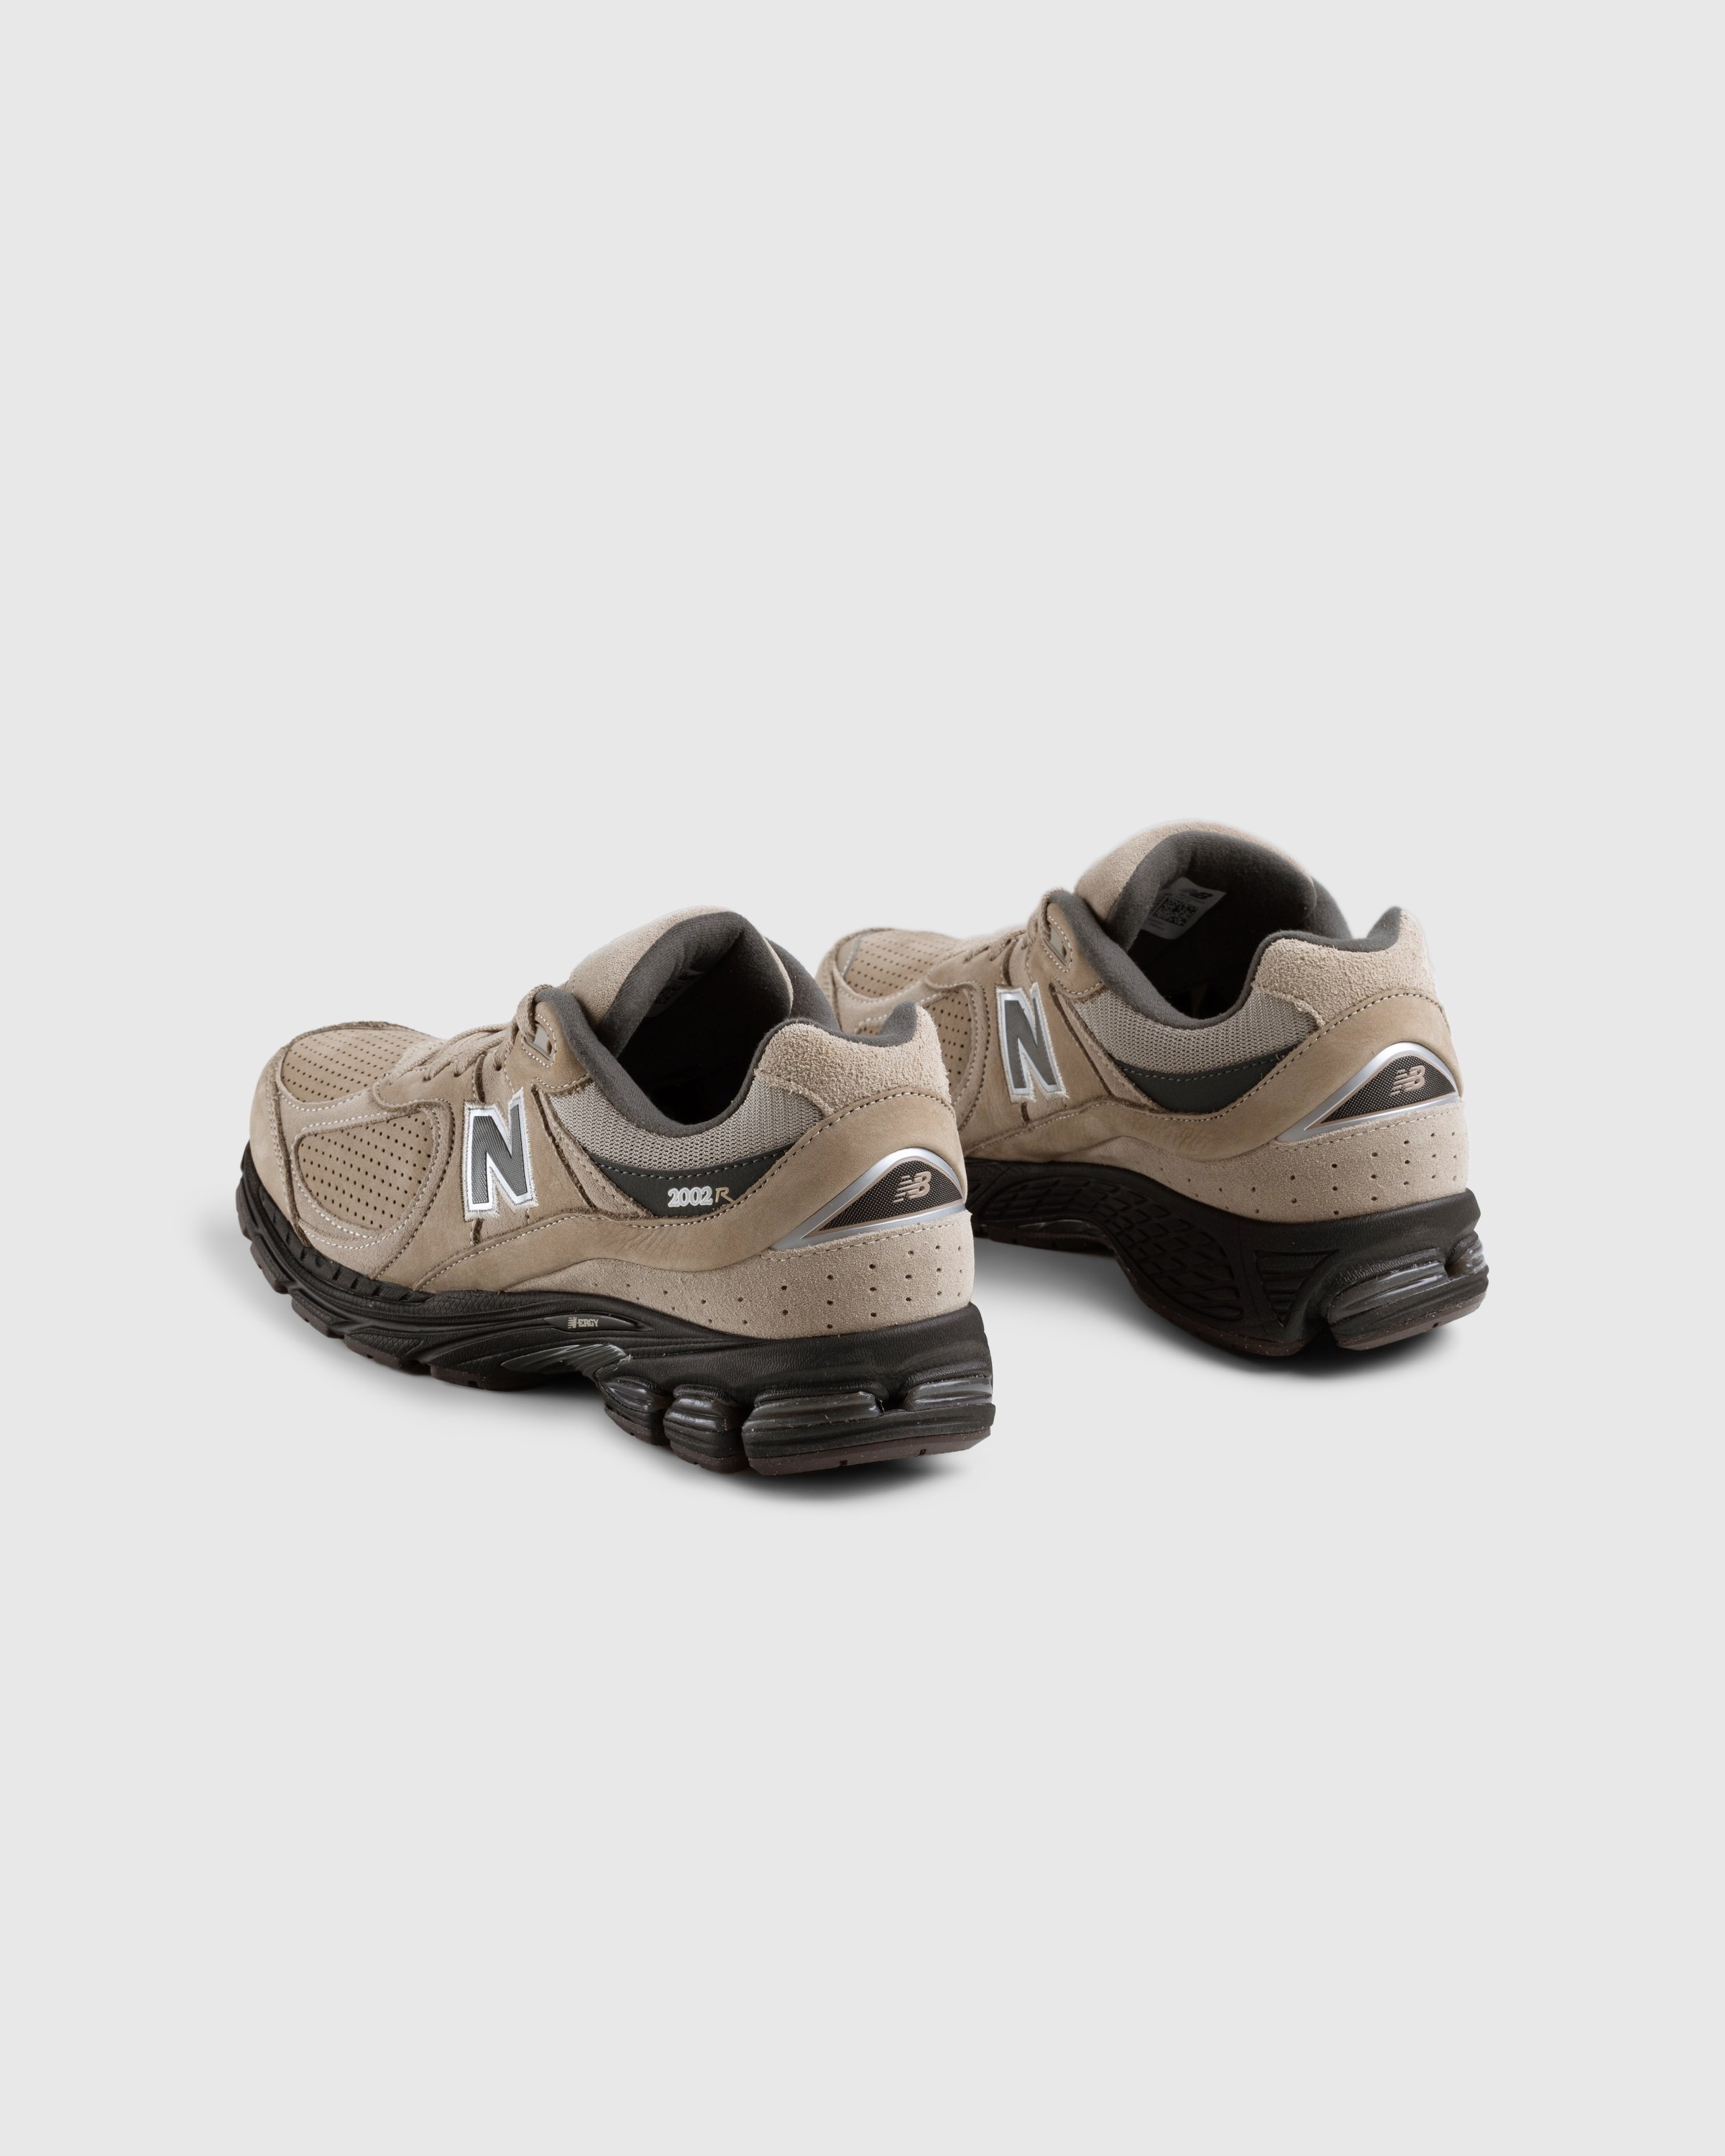 New Balance - M 2002 REG Driftwood - Footwear - Brown - Image 4